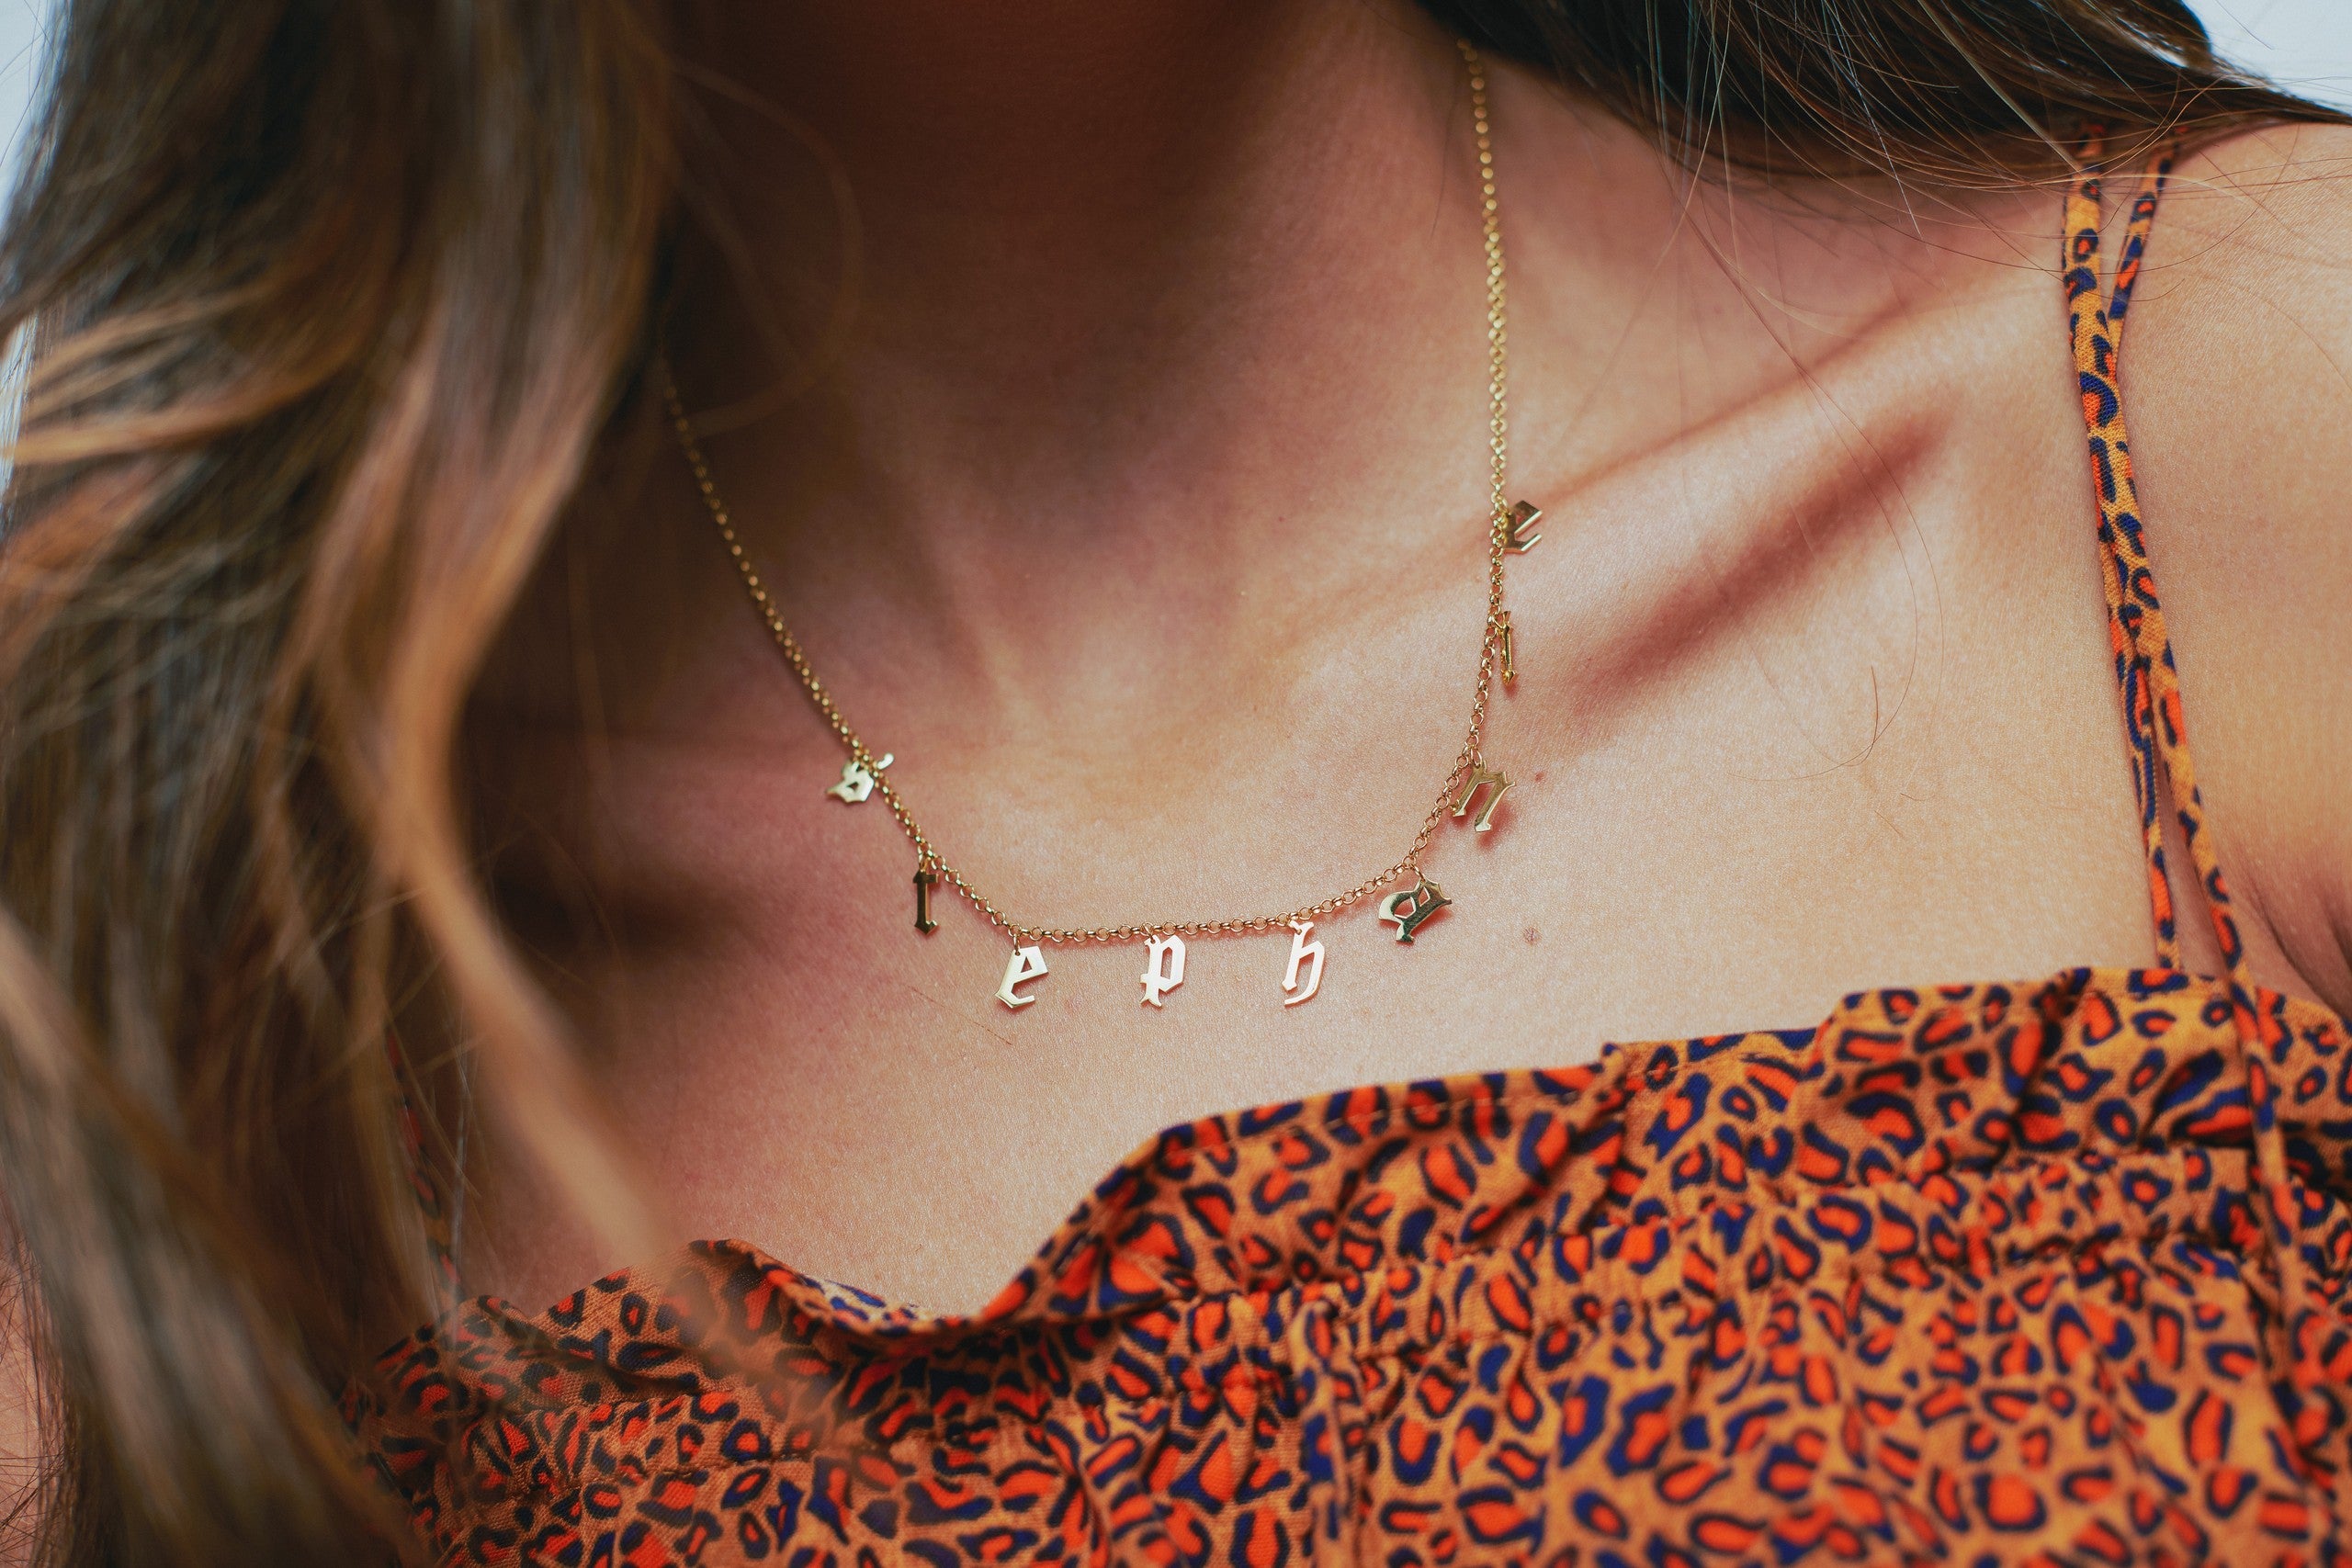 Personalised Men's Monogram Pendant Necklace – Anna Lou of London